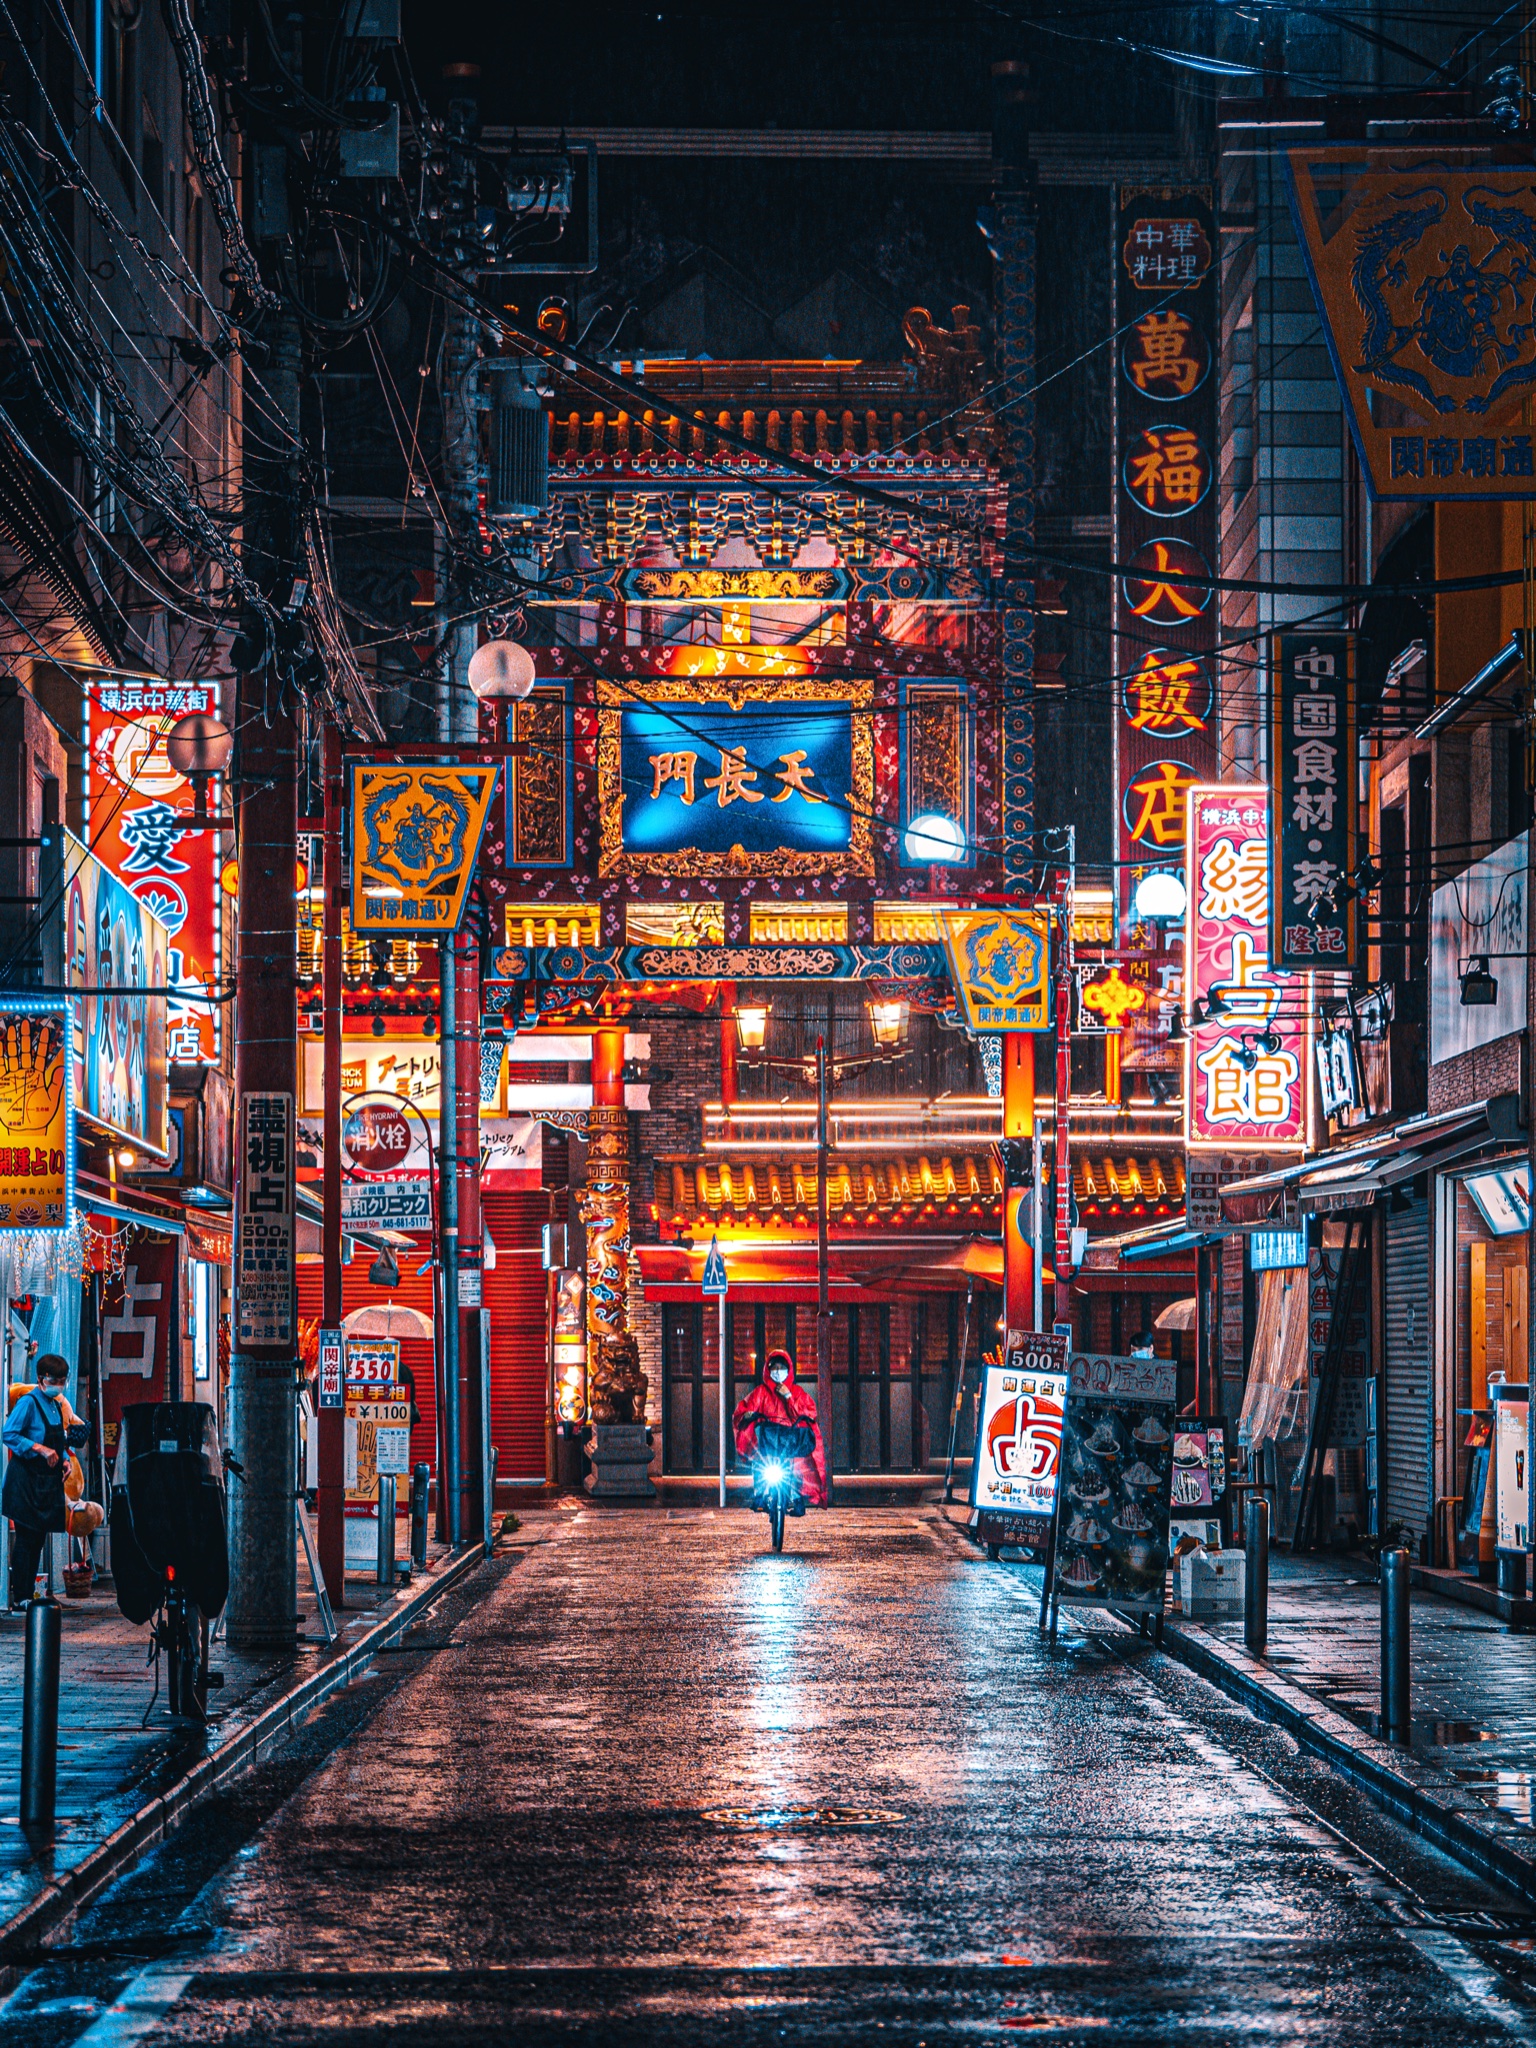 Szuna 写真集販売中 雨の横浜中華街が完全にゲームの世界 T Co Ngdnwwuupi Twitter